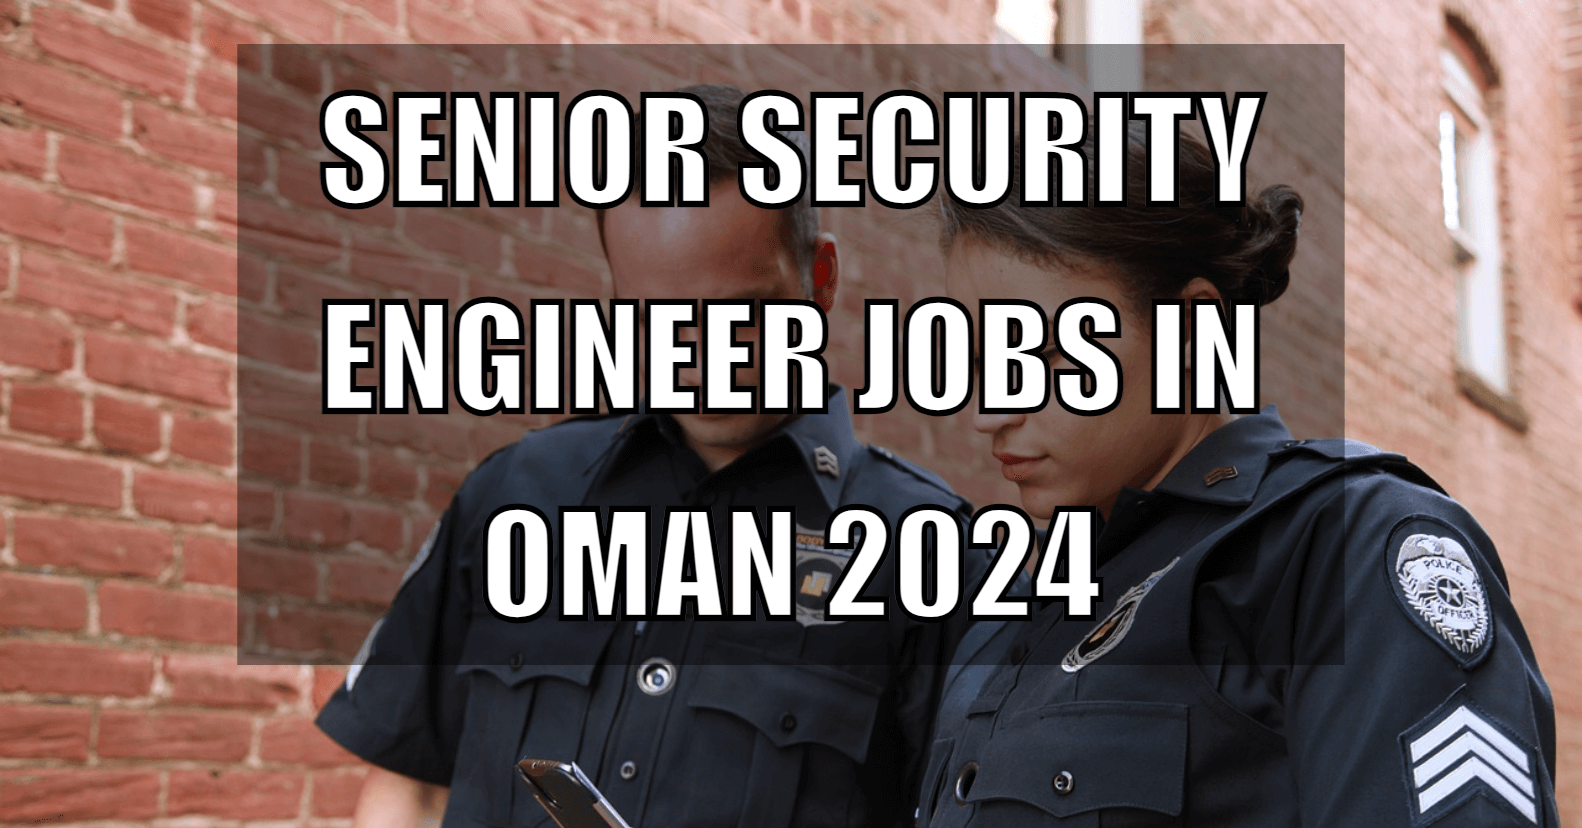 Jobs in Oman 2024